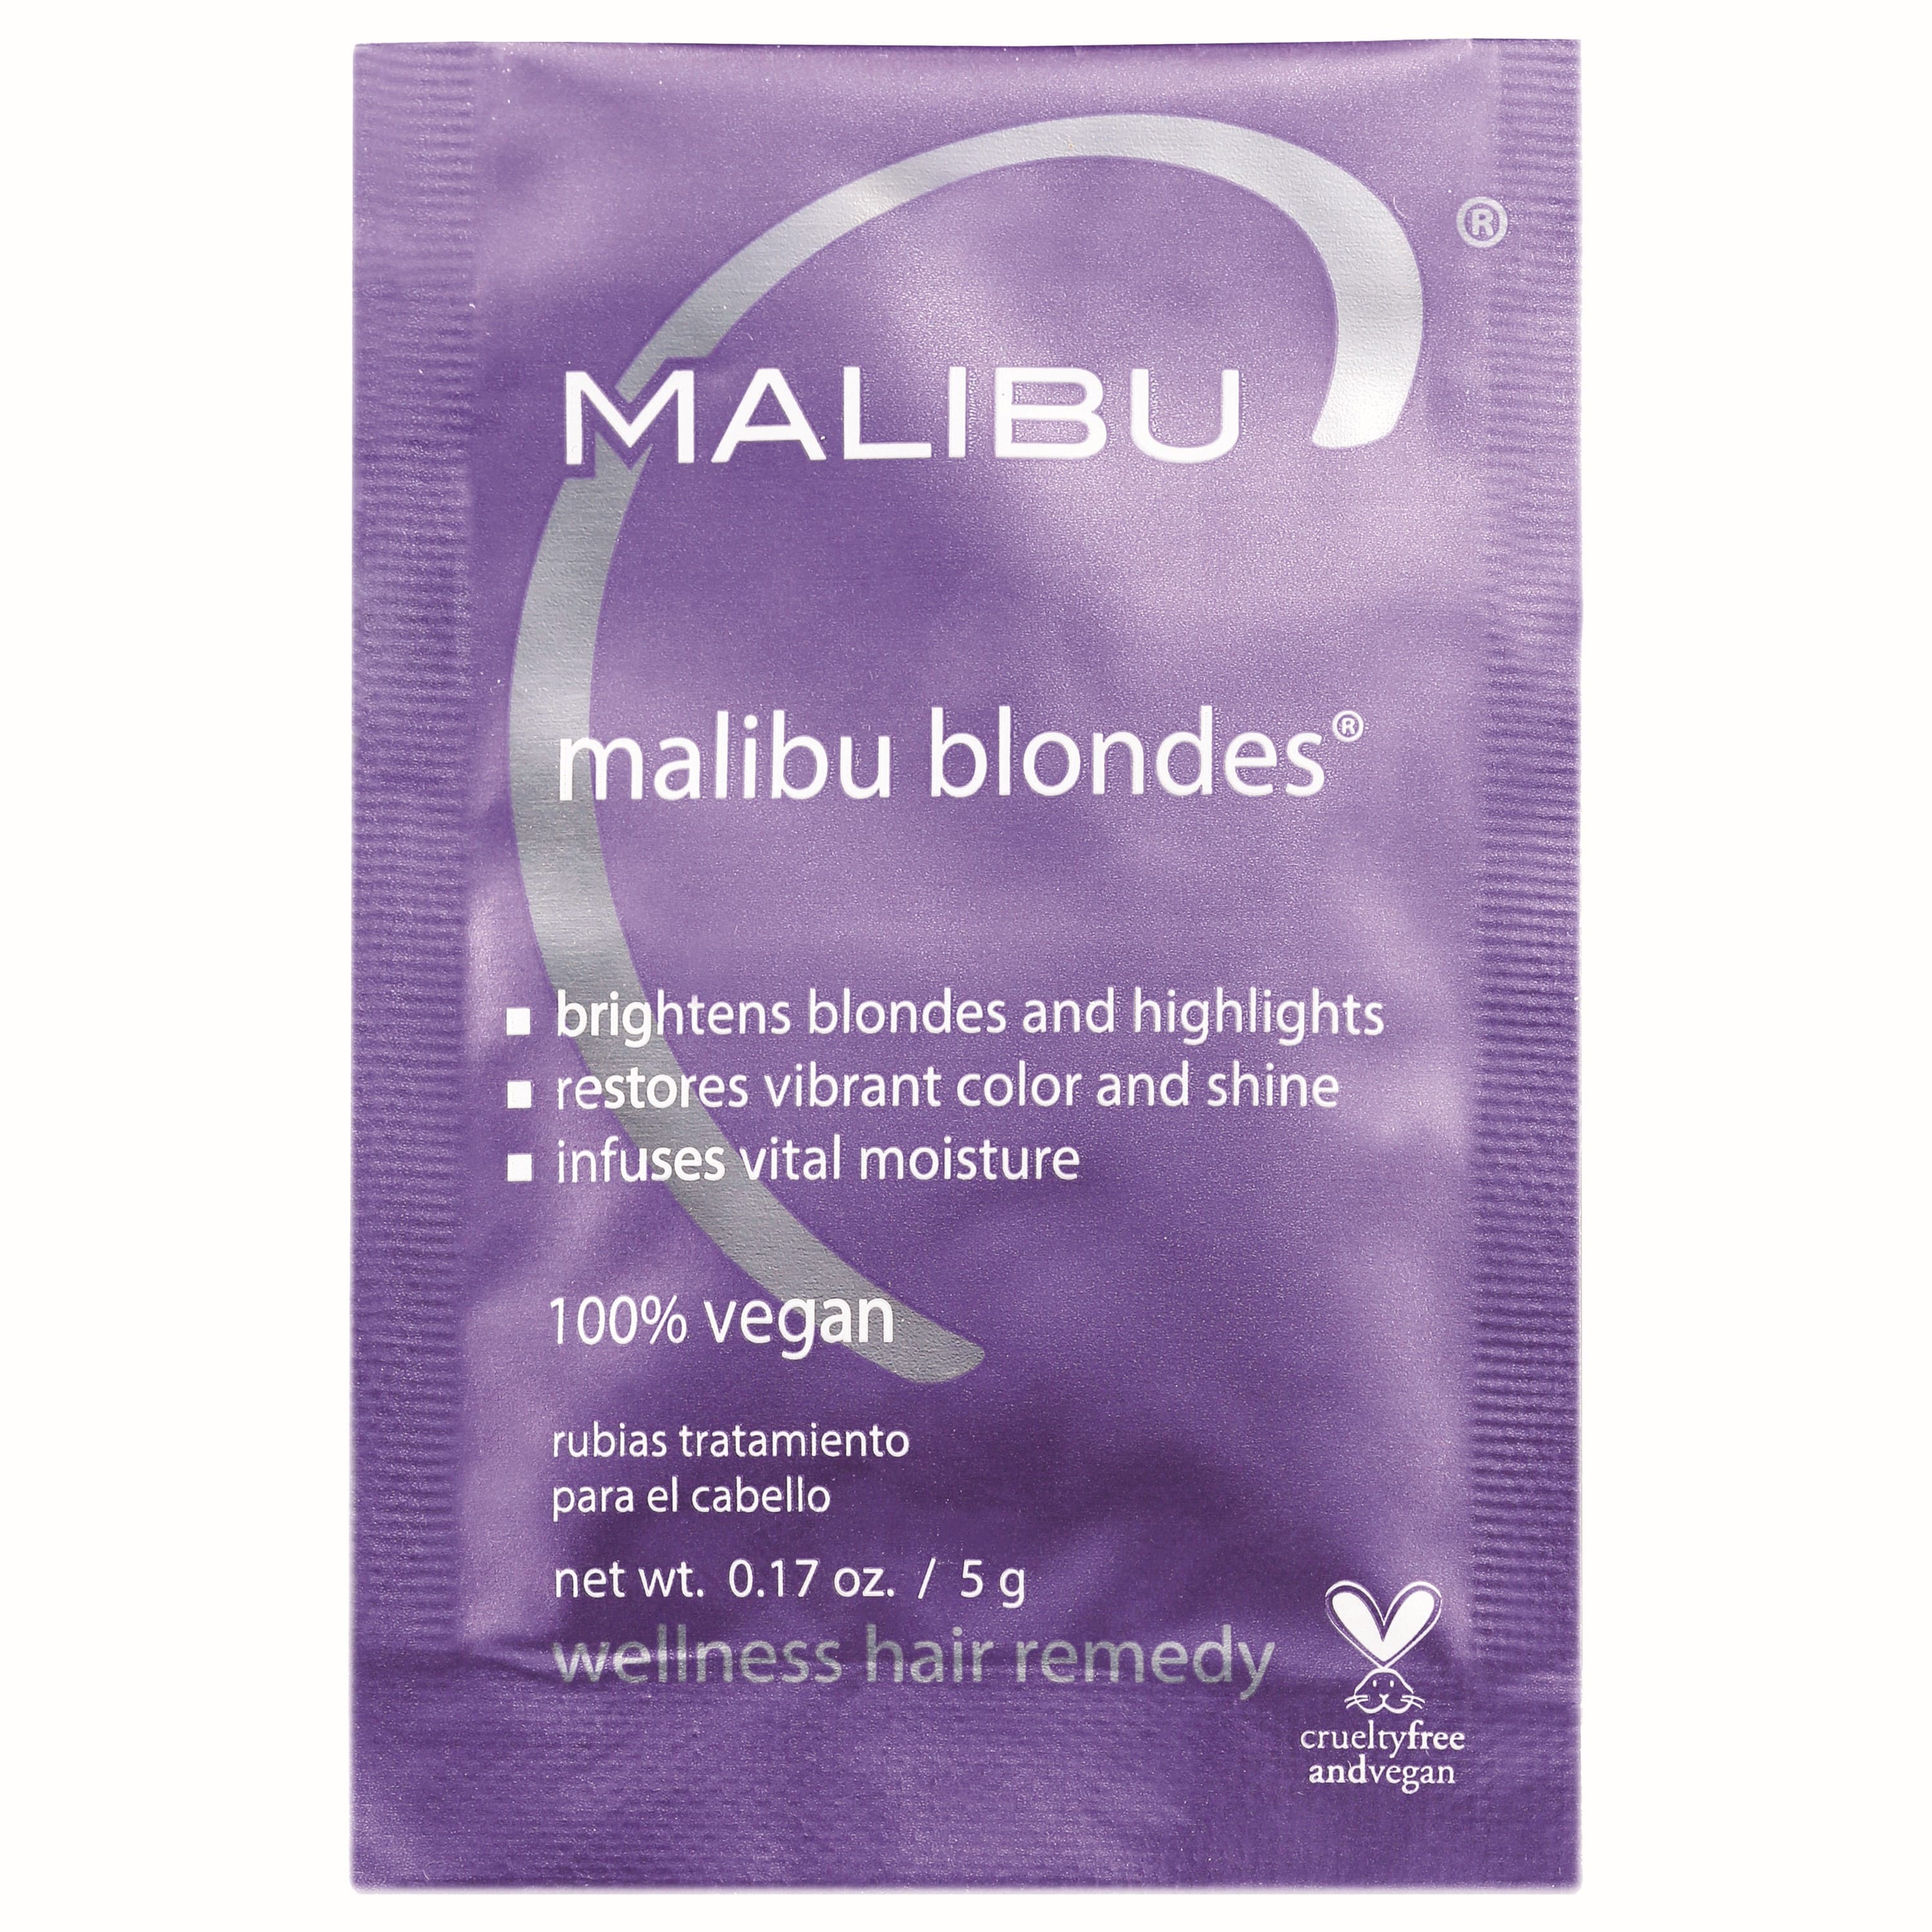 Malibu C Malibu Blondes Wellness Hair Remedy, 1 Packet